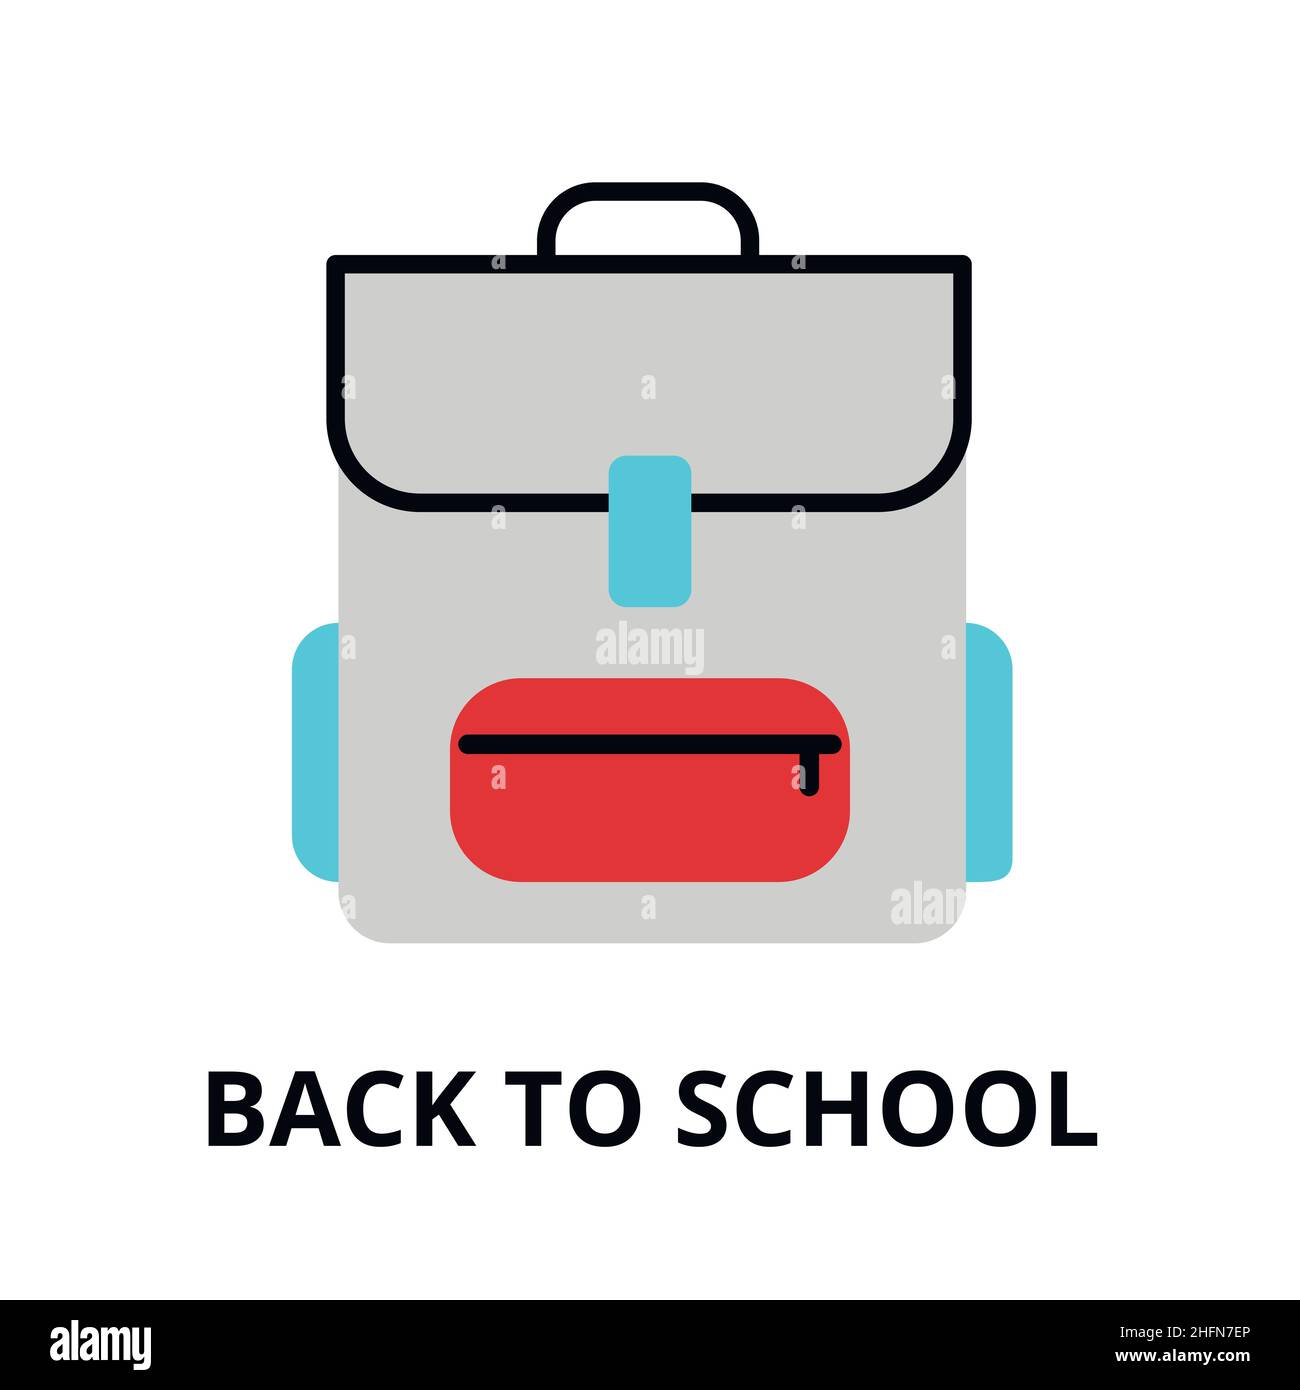 Back to School Symbol, flache dünne Linie Vektor-Illustration, für Grafik-und Web-Design Stock Vektor